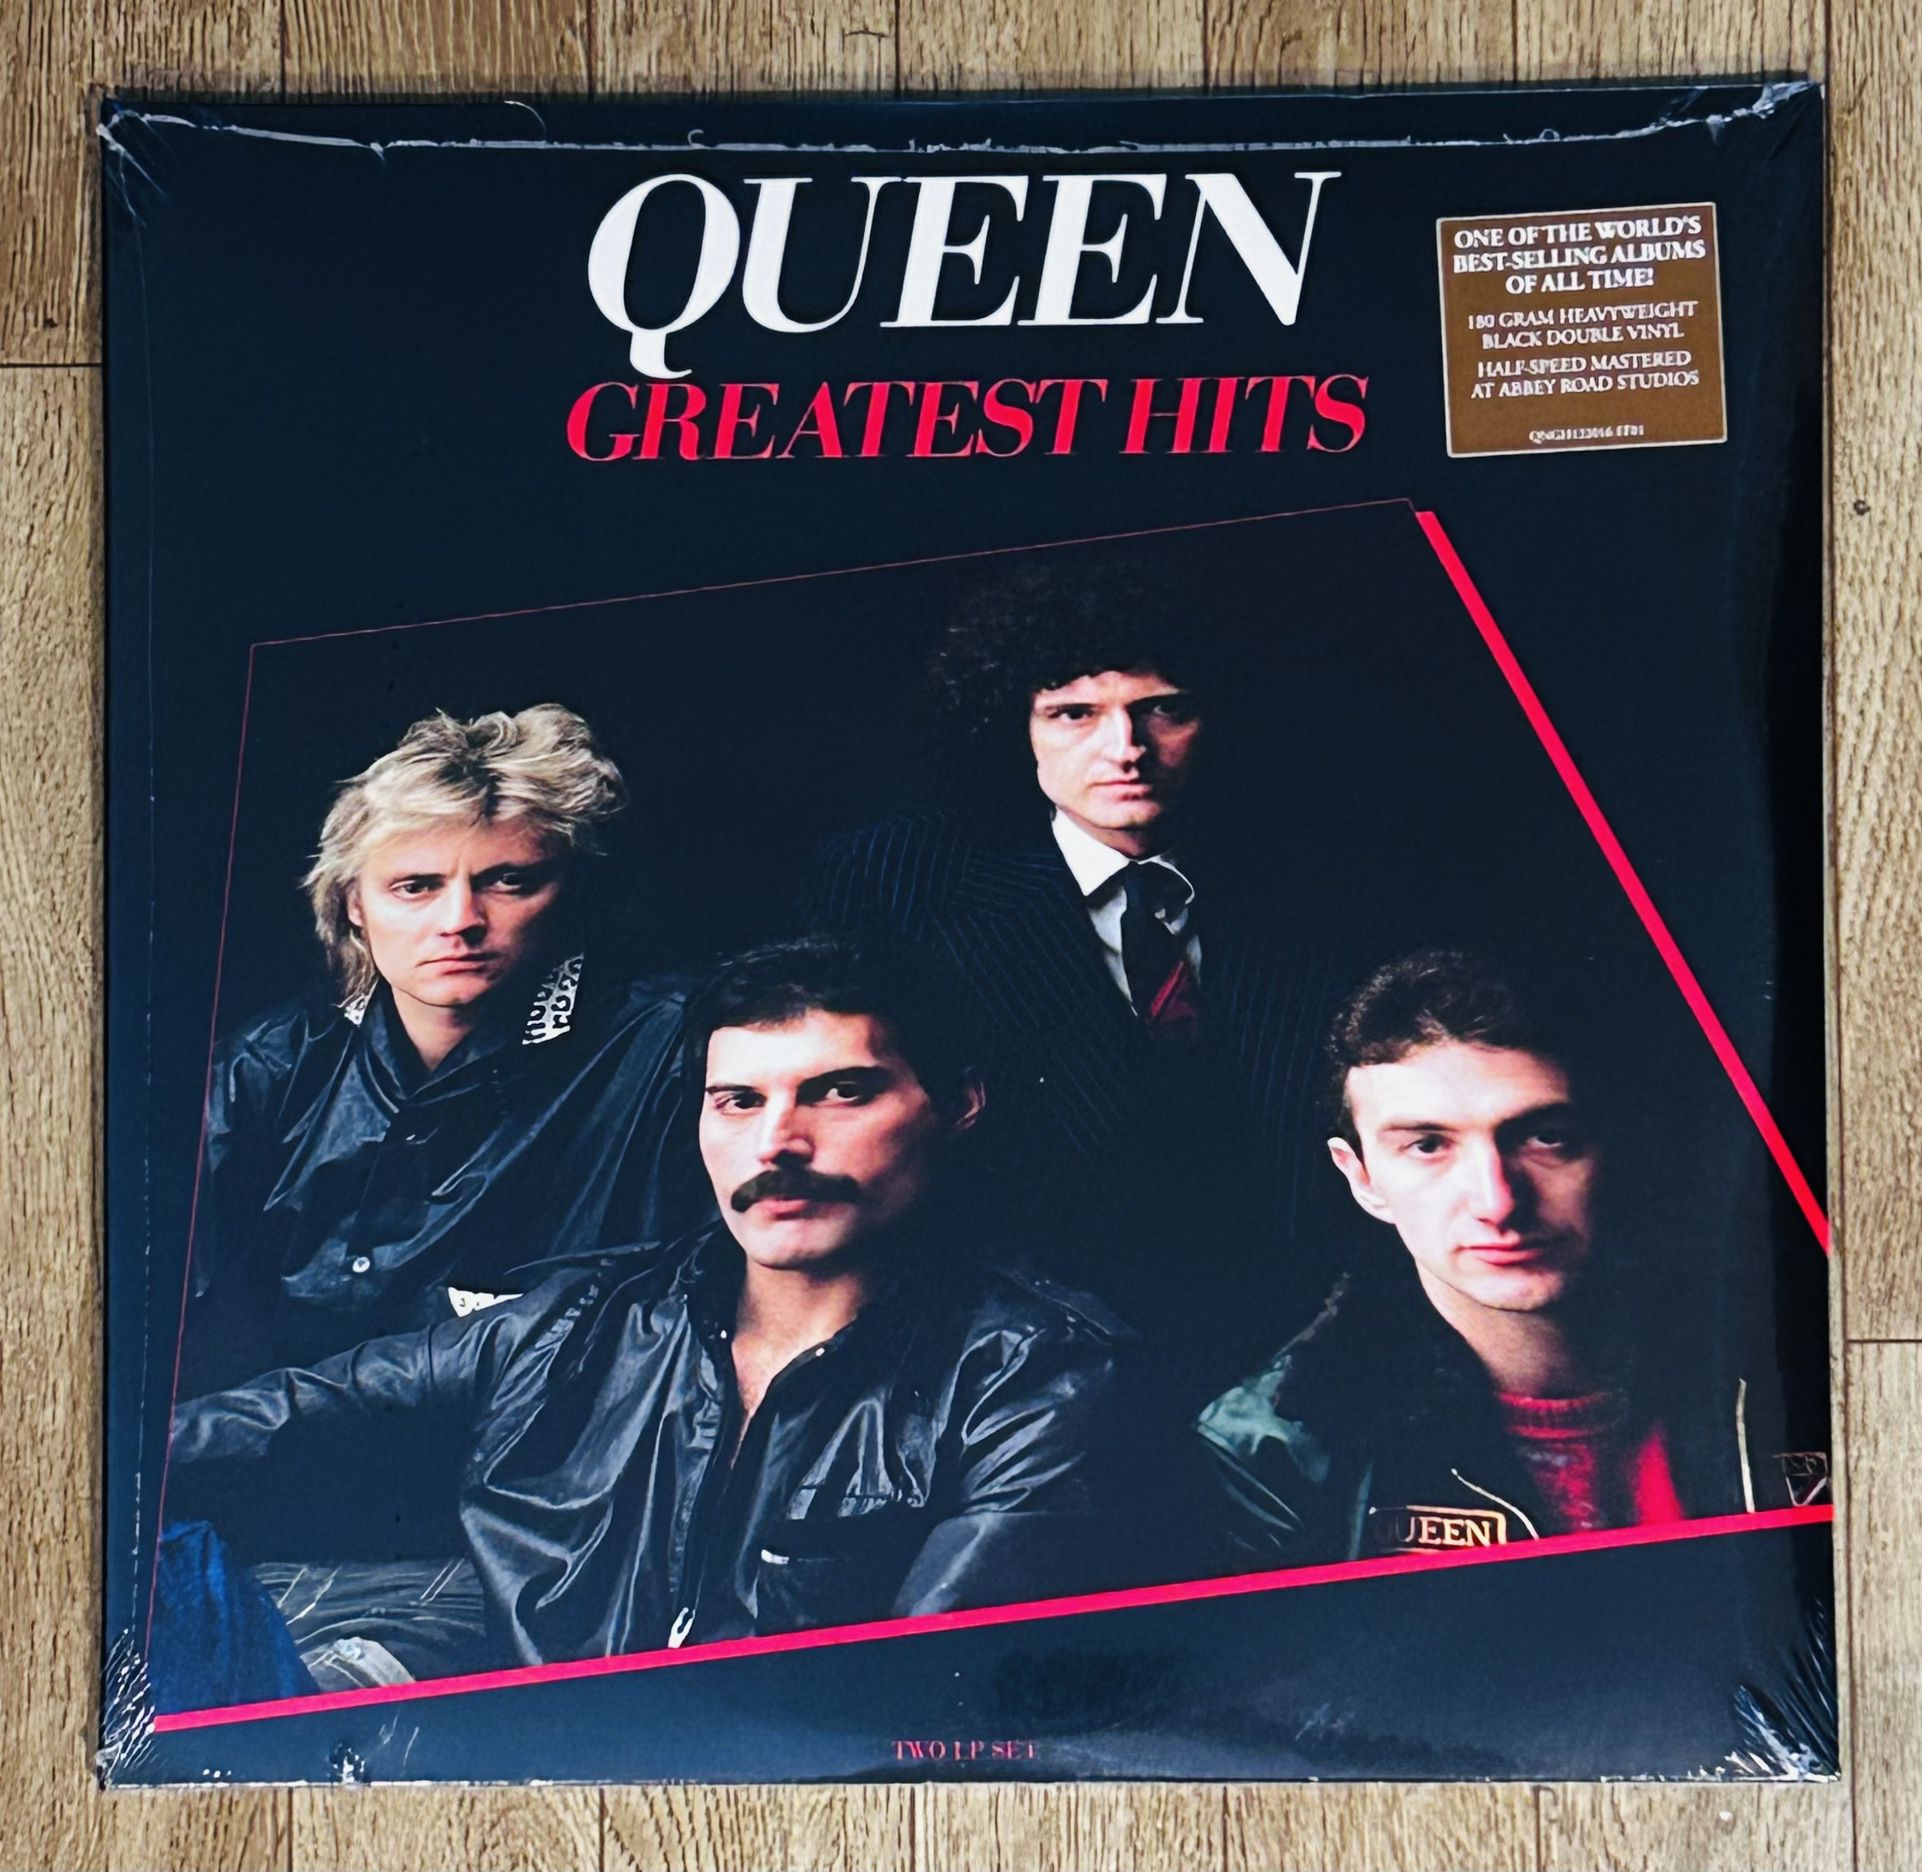 Queen 2LP Vinyl Record 180gram - Greatest Hits - New Sealed 